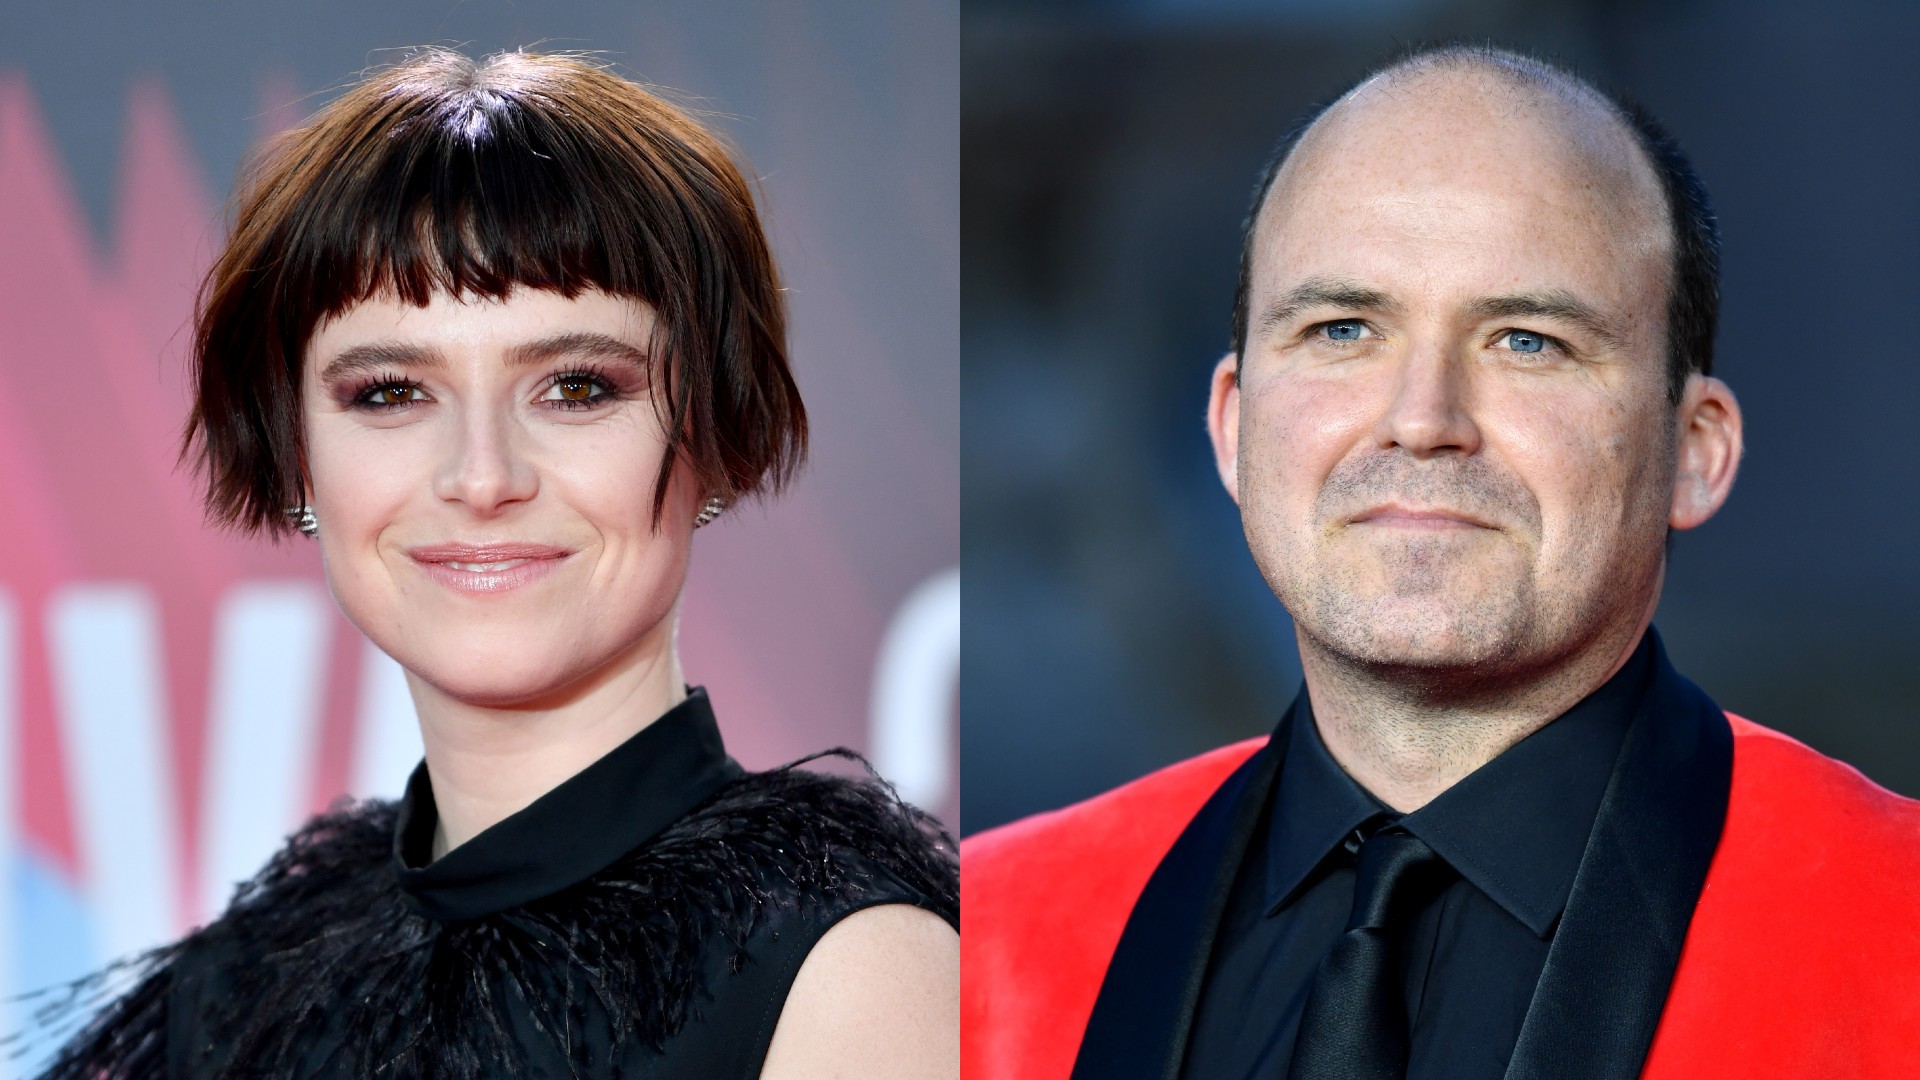 WATCH: Jessie Buckley and Rory Kinnear Star in Super-Creepy Trailer for Horror Film 'Men'